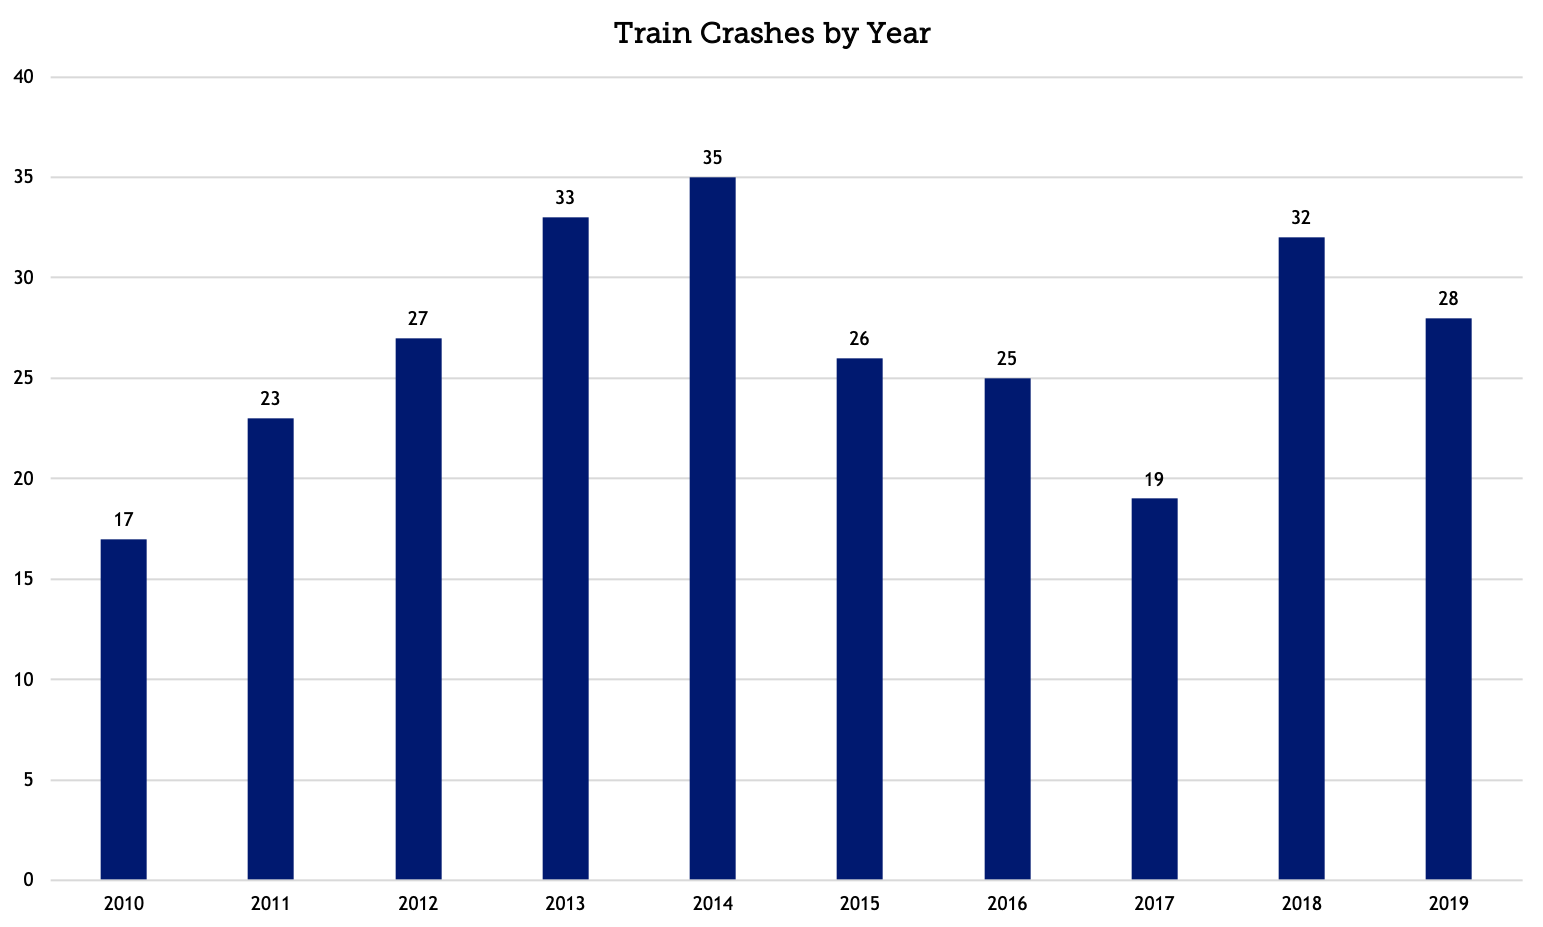 Train-Vehicle_CrashesYear_200916.png detail image